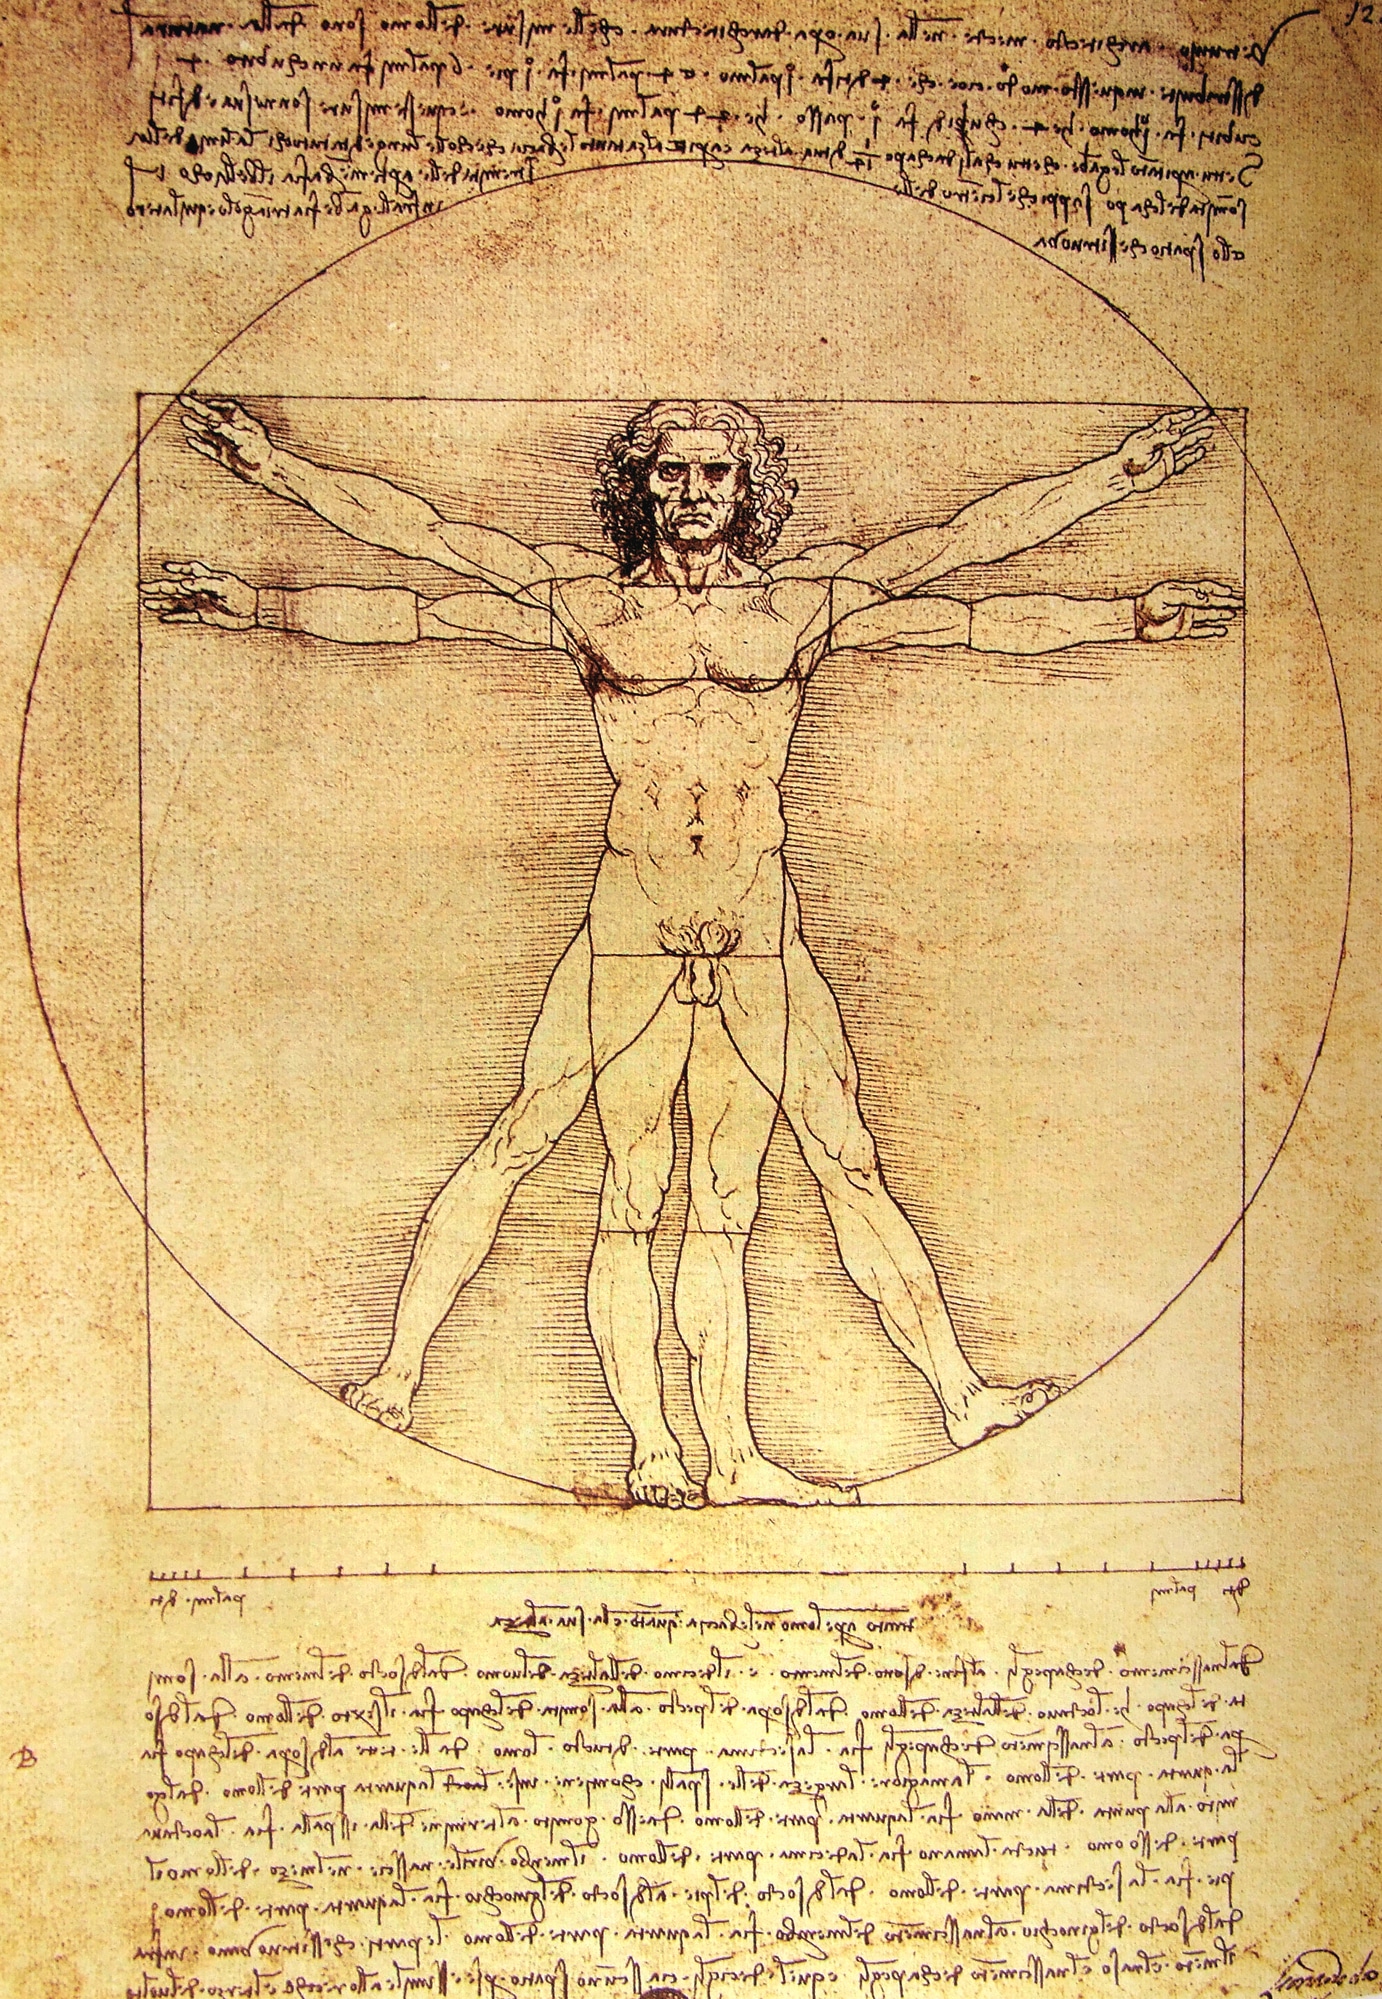 The Vitruvian Man - The biography of Leonardo da Vinci